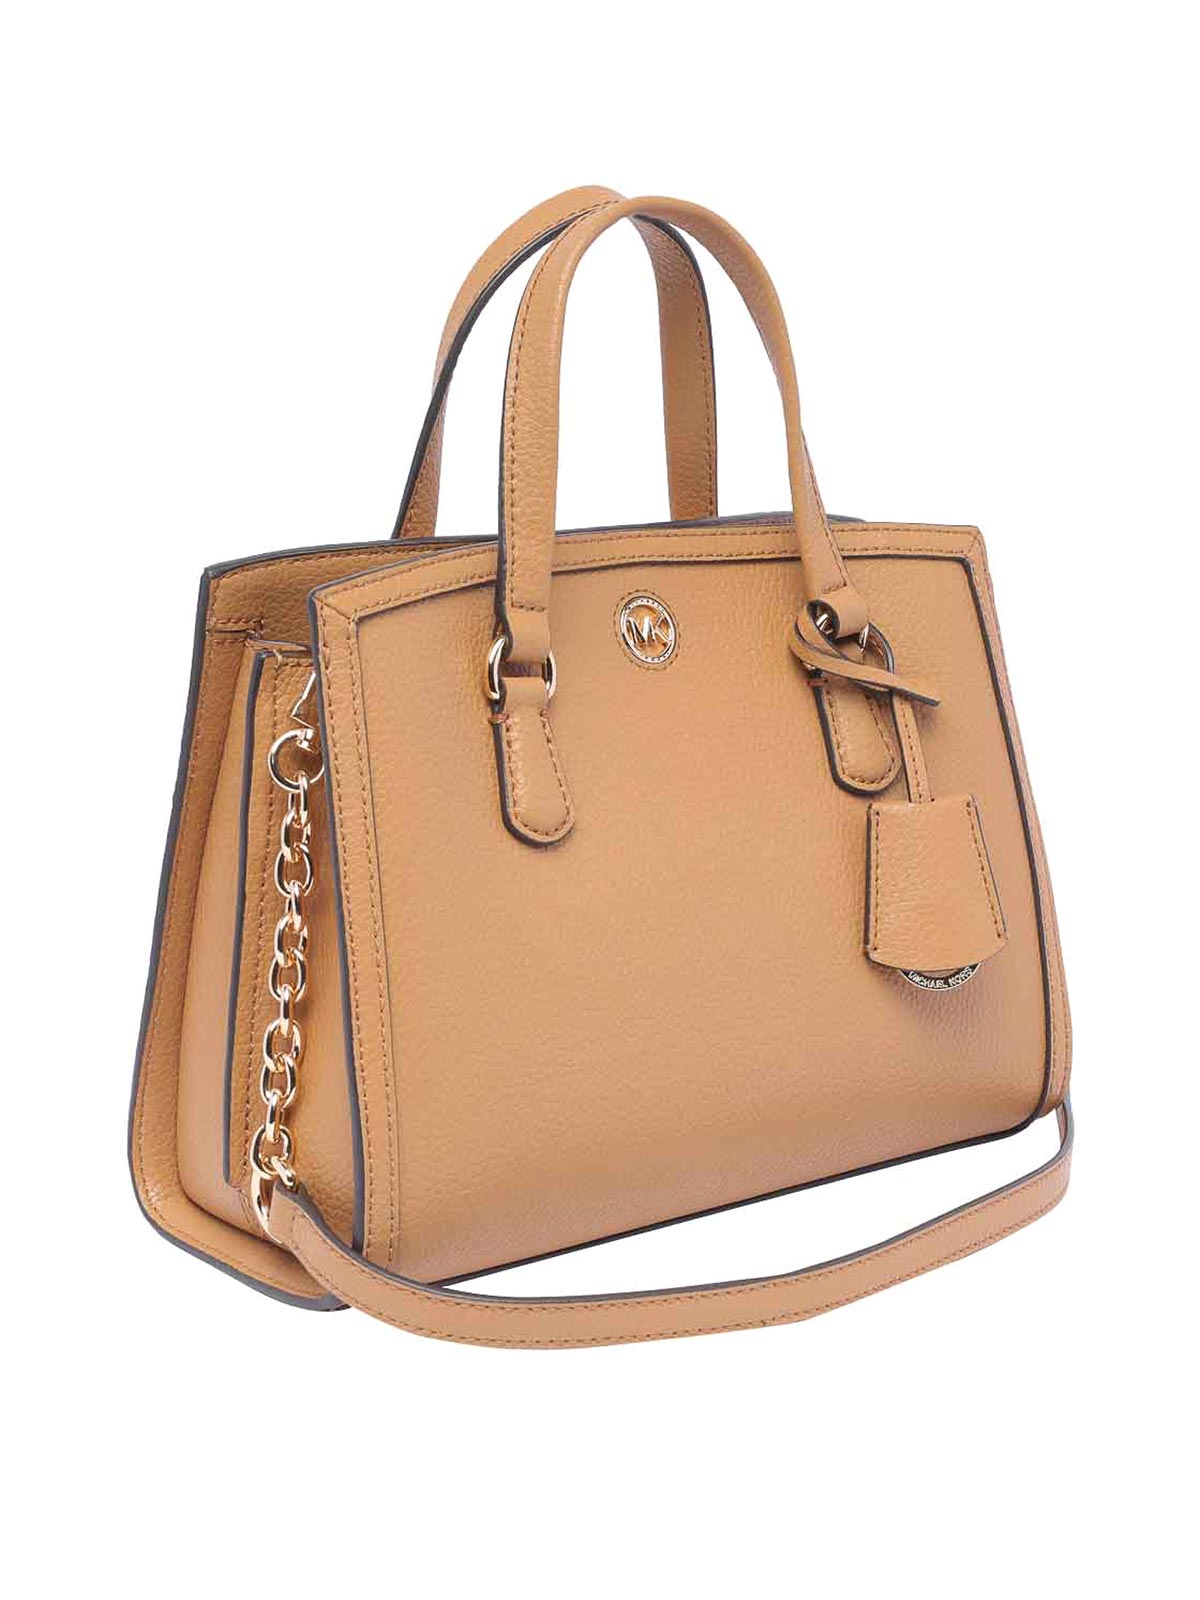 Bags | Buy Women's Bags Online Qatar - AIGNER